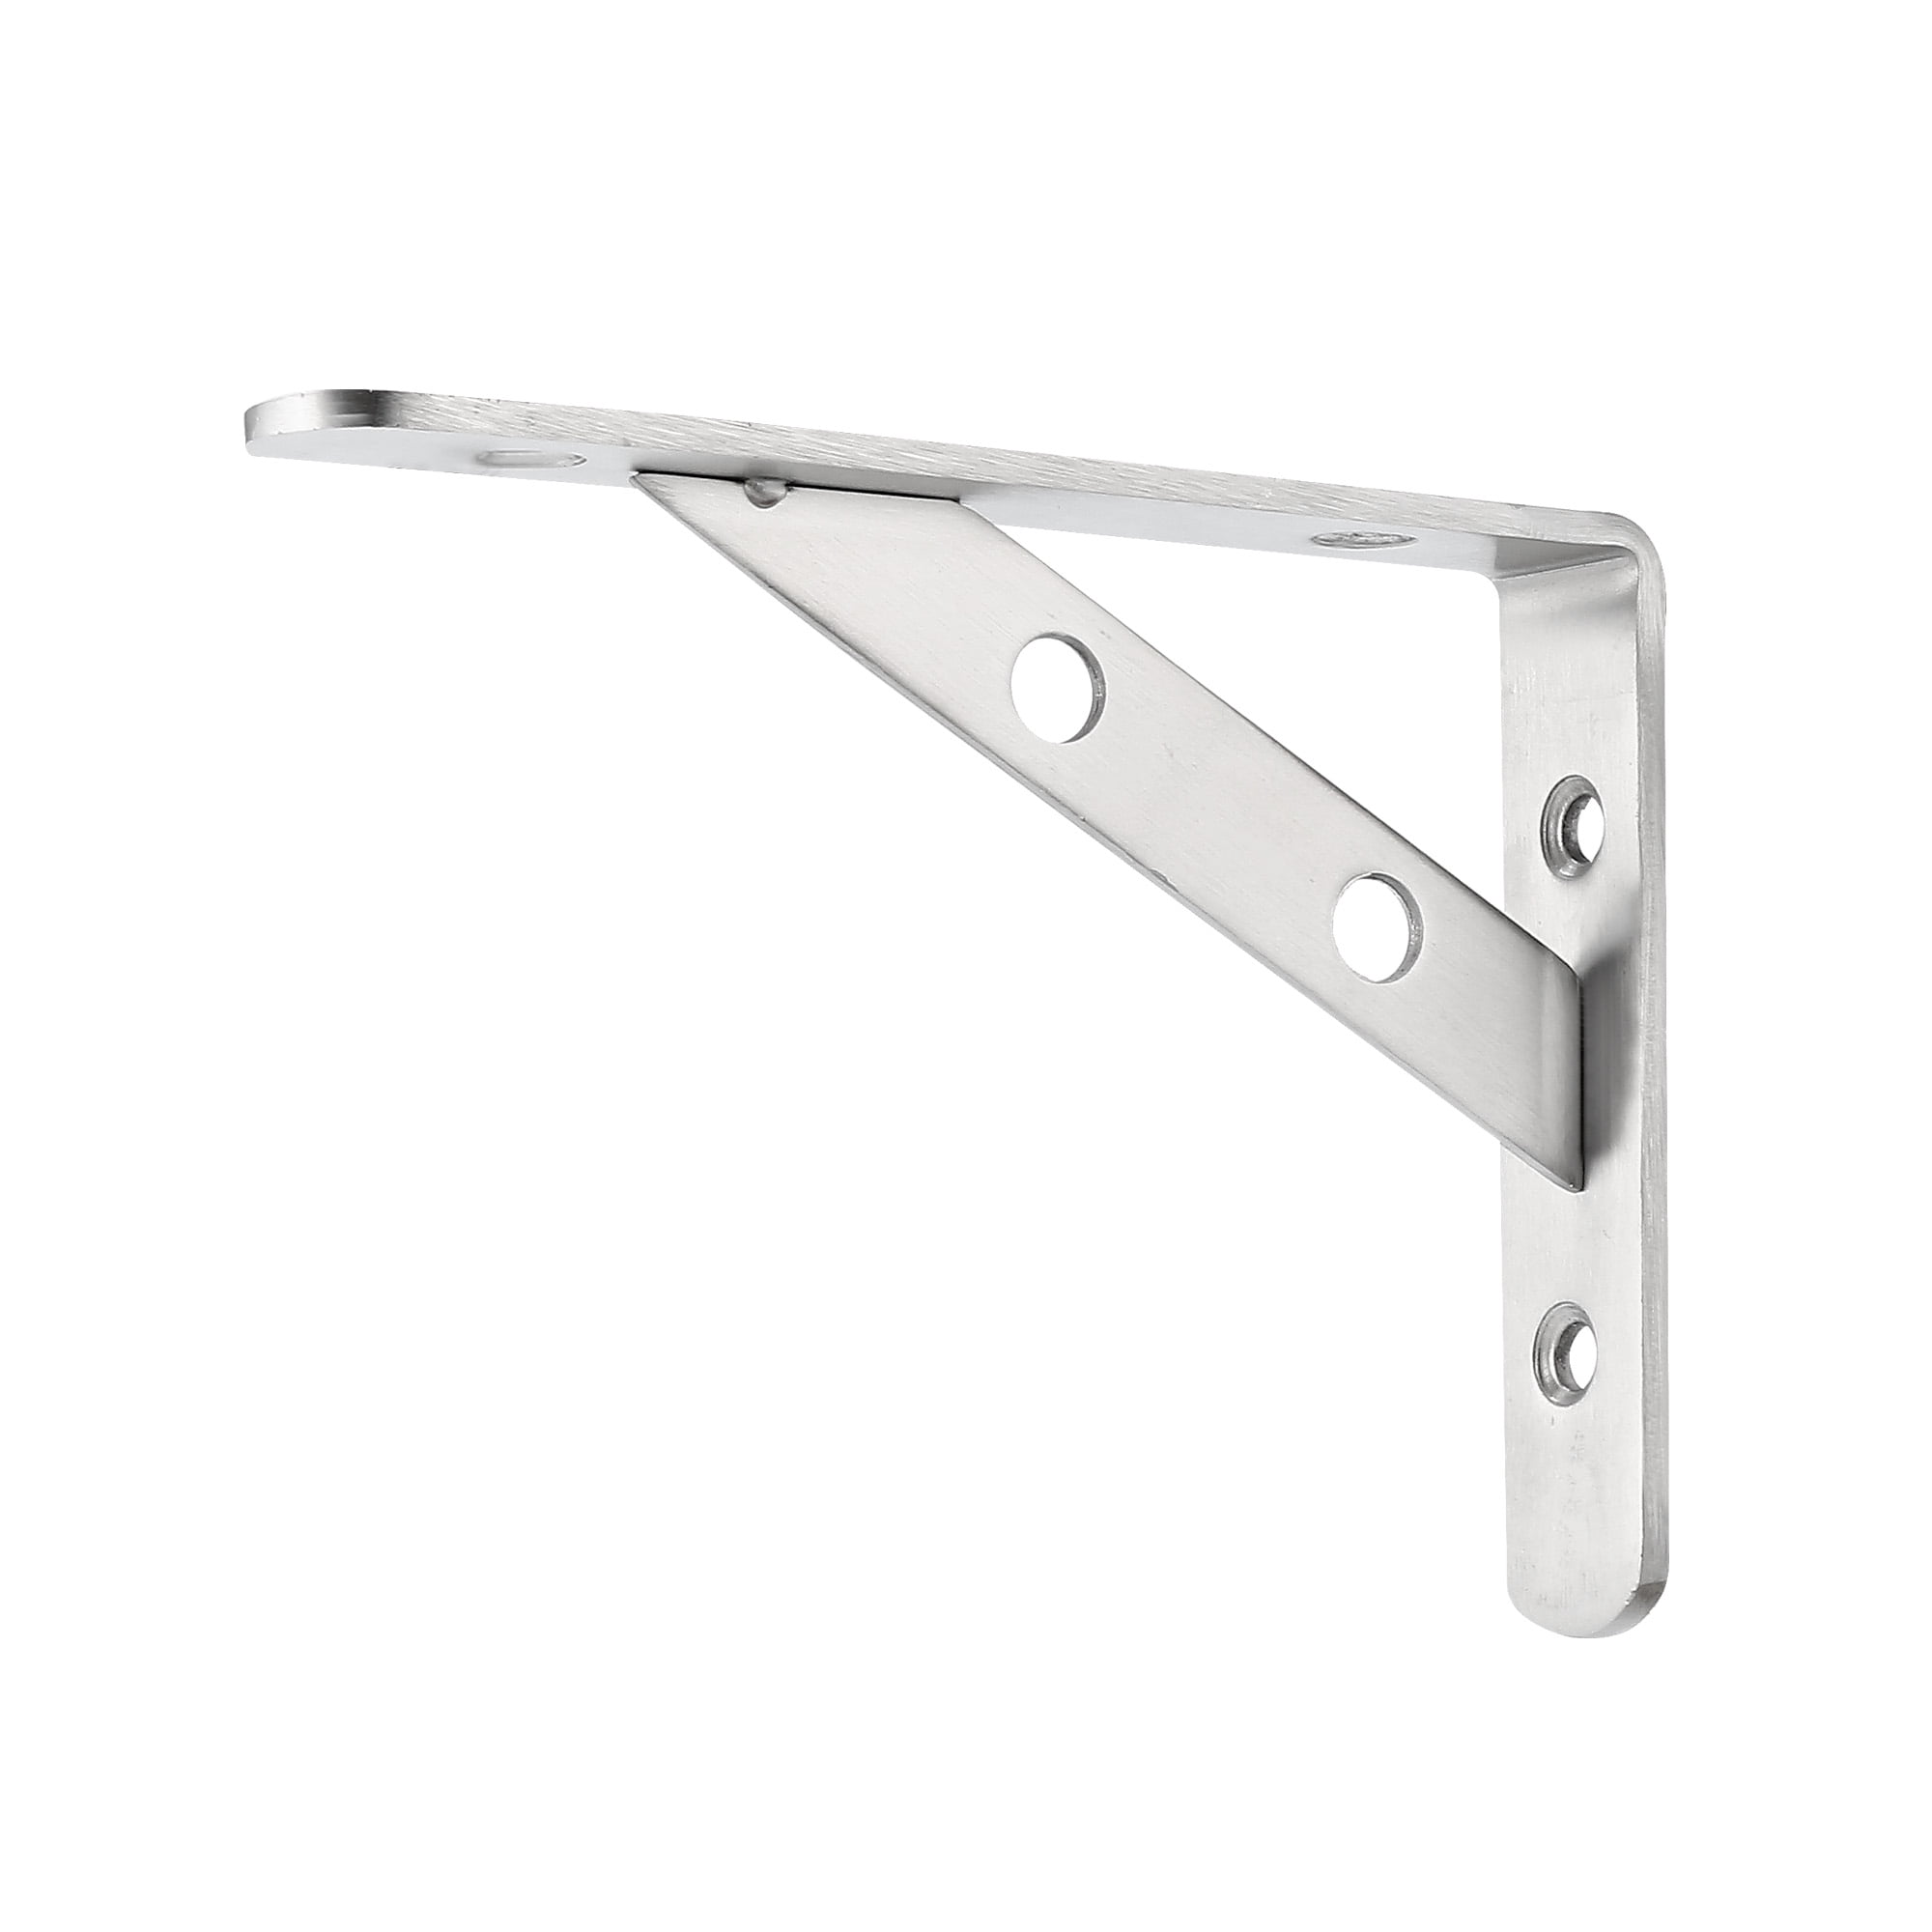 2PCS Stainless Steel Shelf Bracket 90 Degree Angle Corner Brace Shelf Support US 